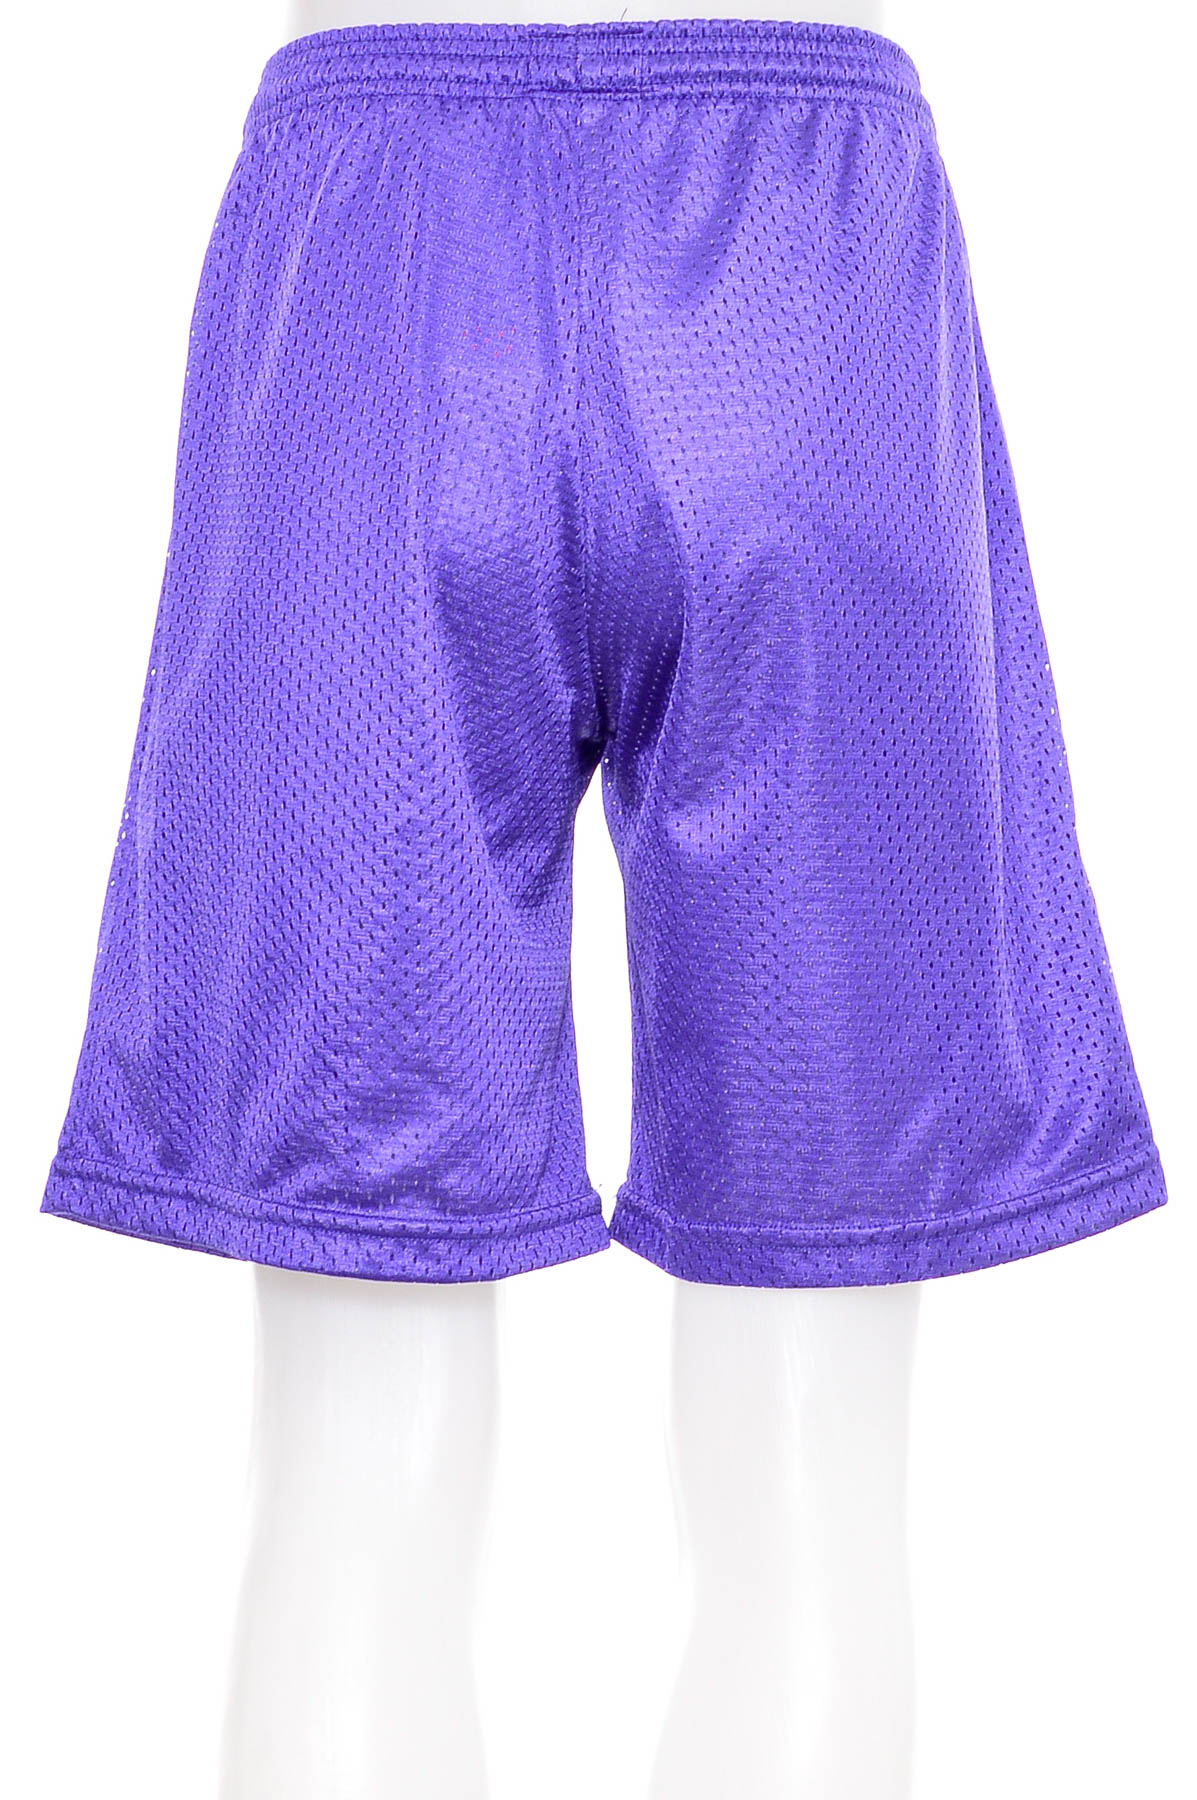 Men's shorts - FIT 2 WIN - 1